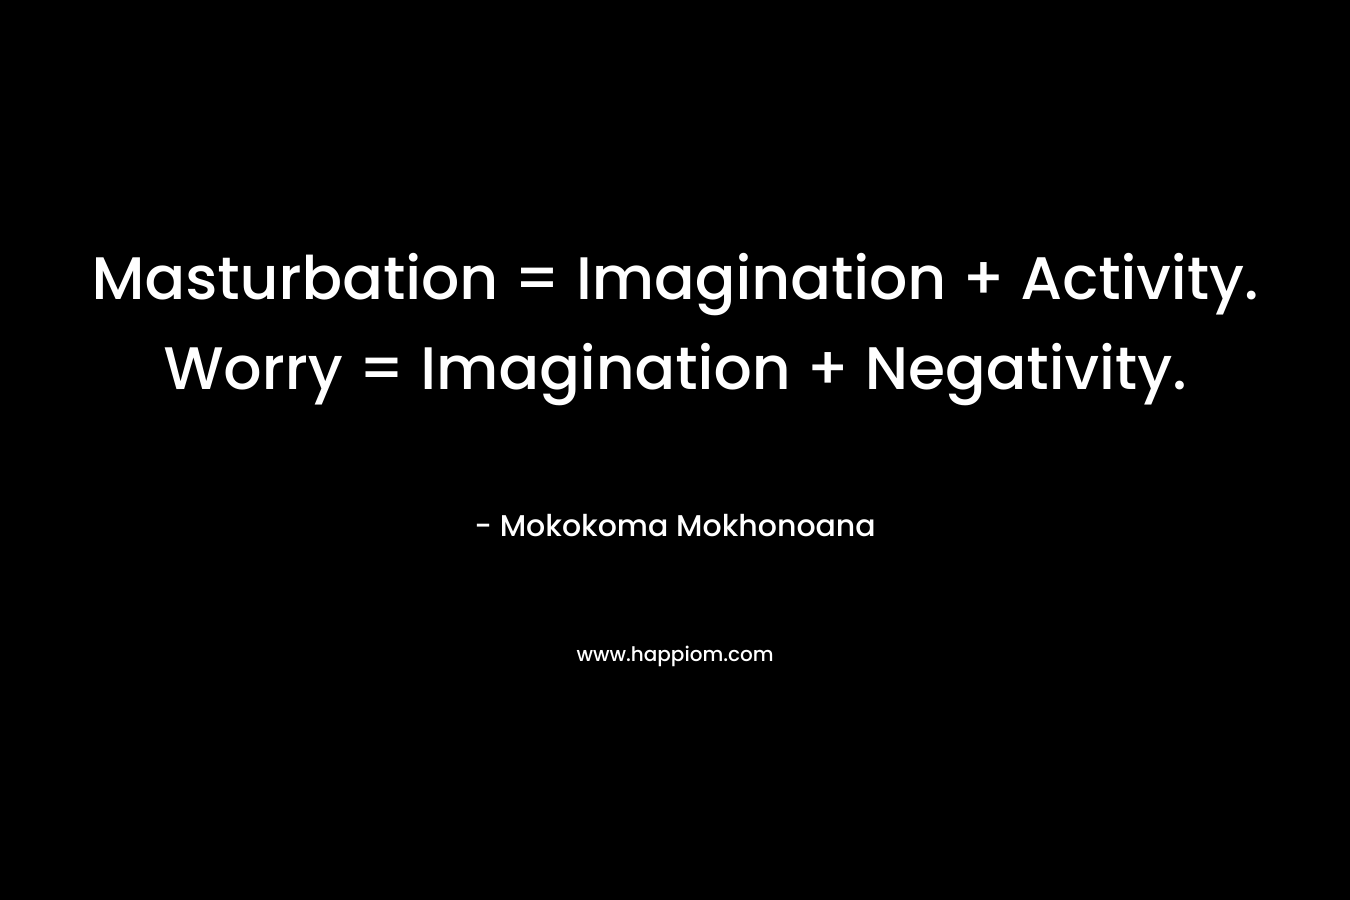 Masturbation = Imagination + Activity. Worry = Imagination + Negativity.